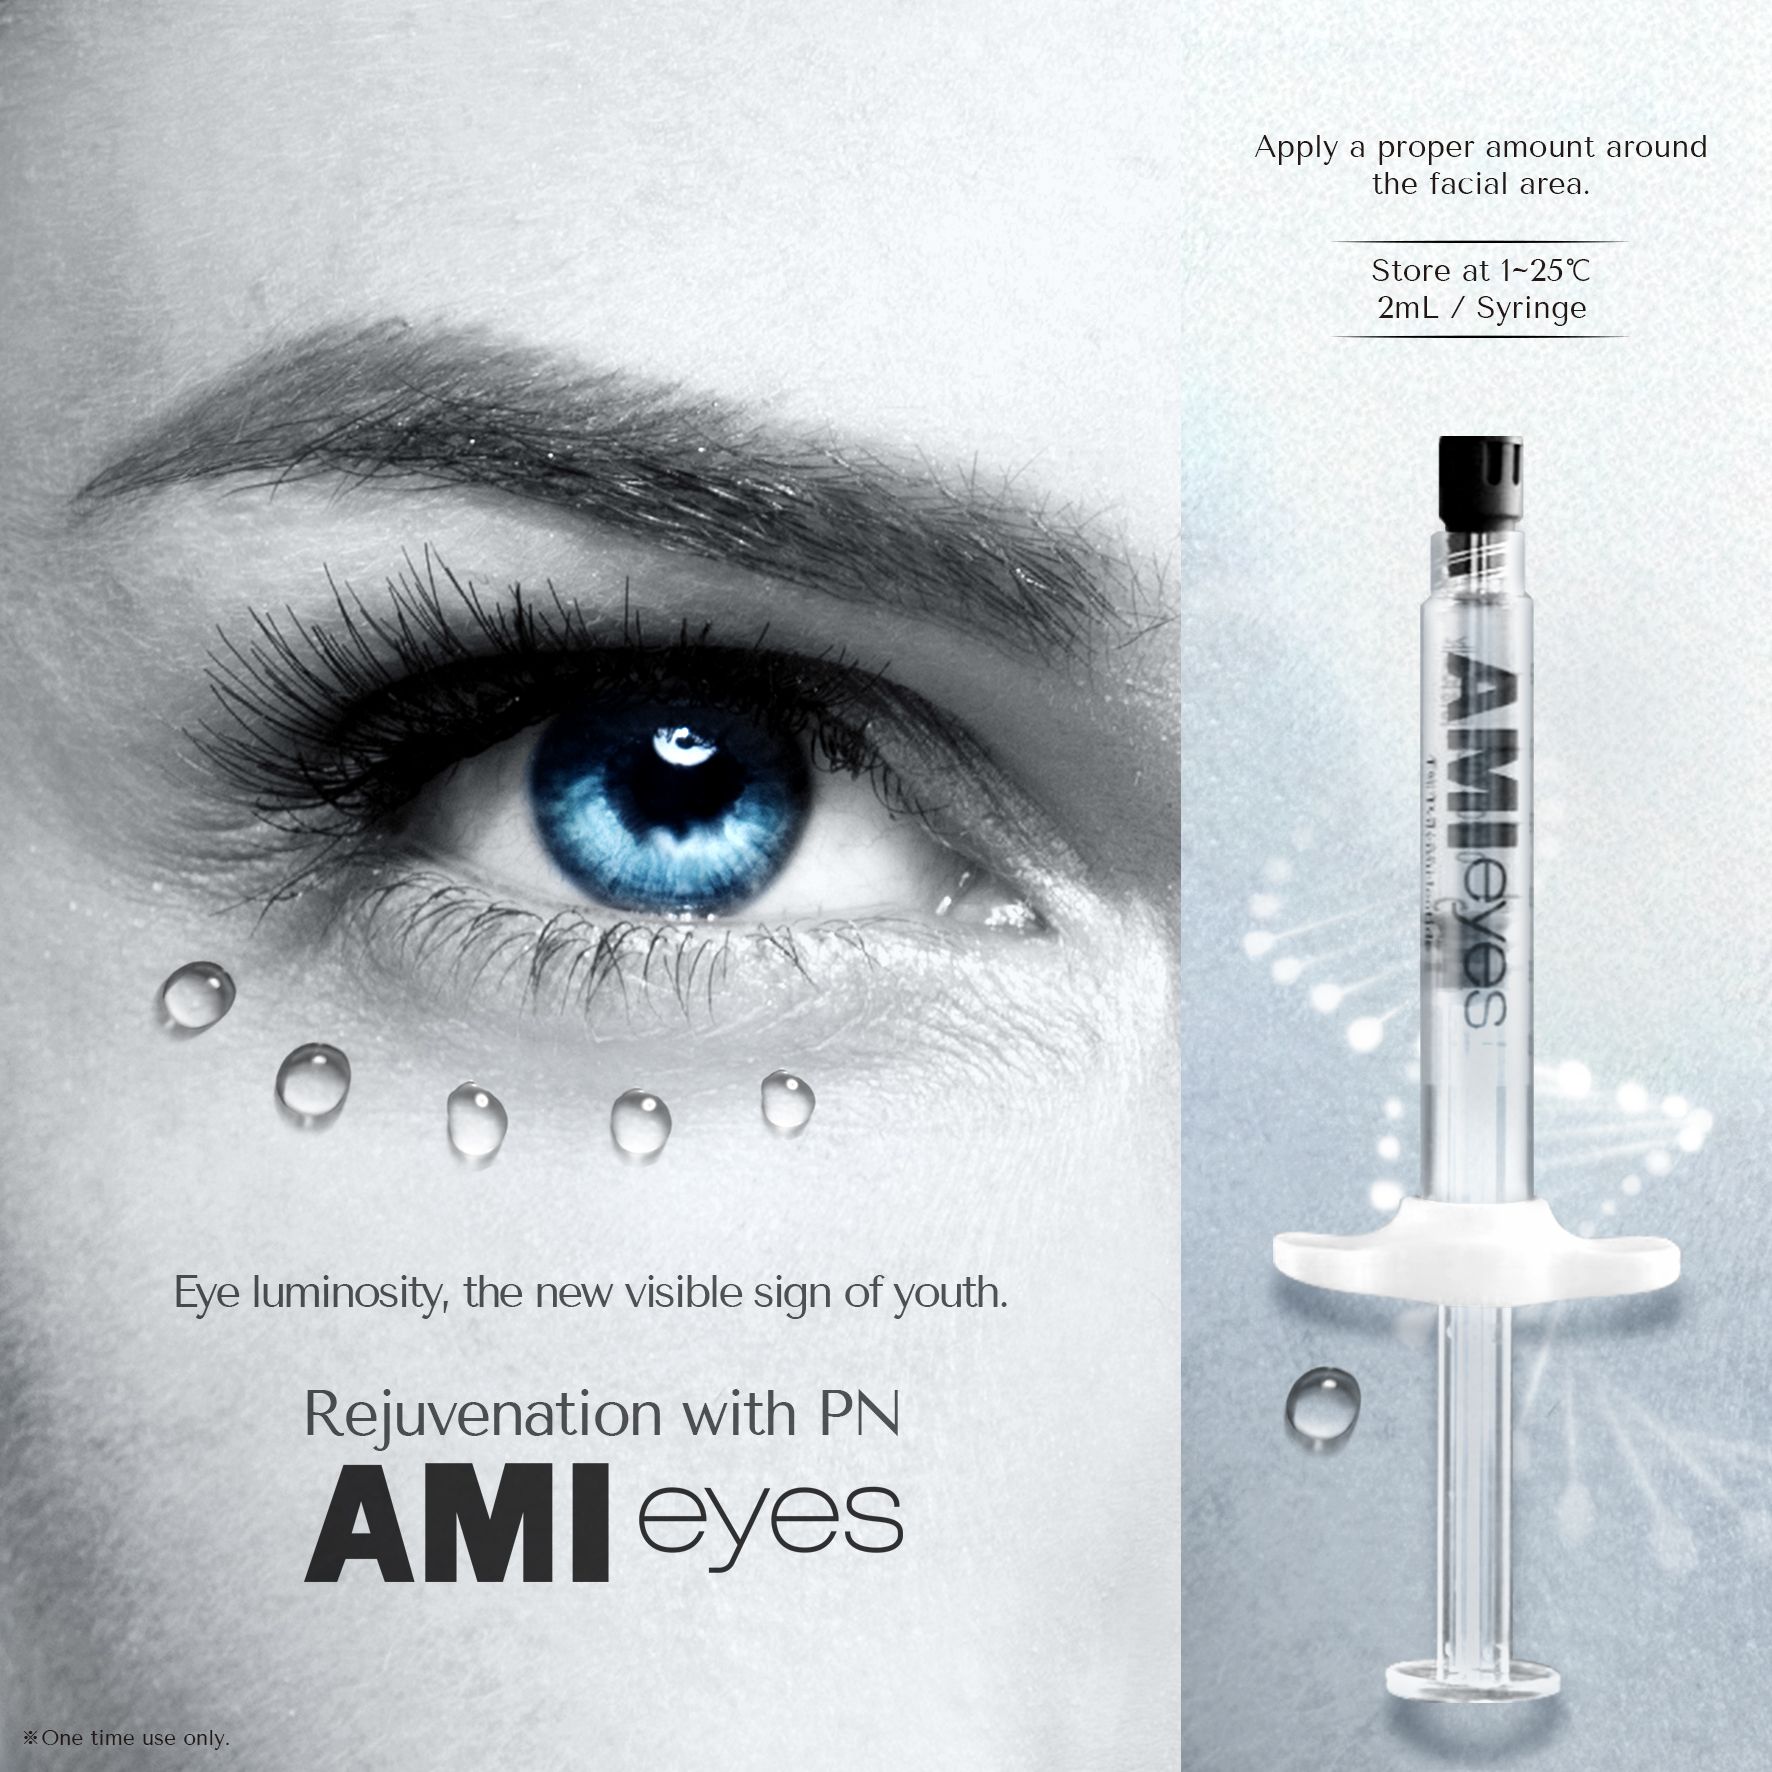 Ami Eyes